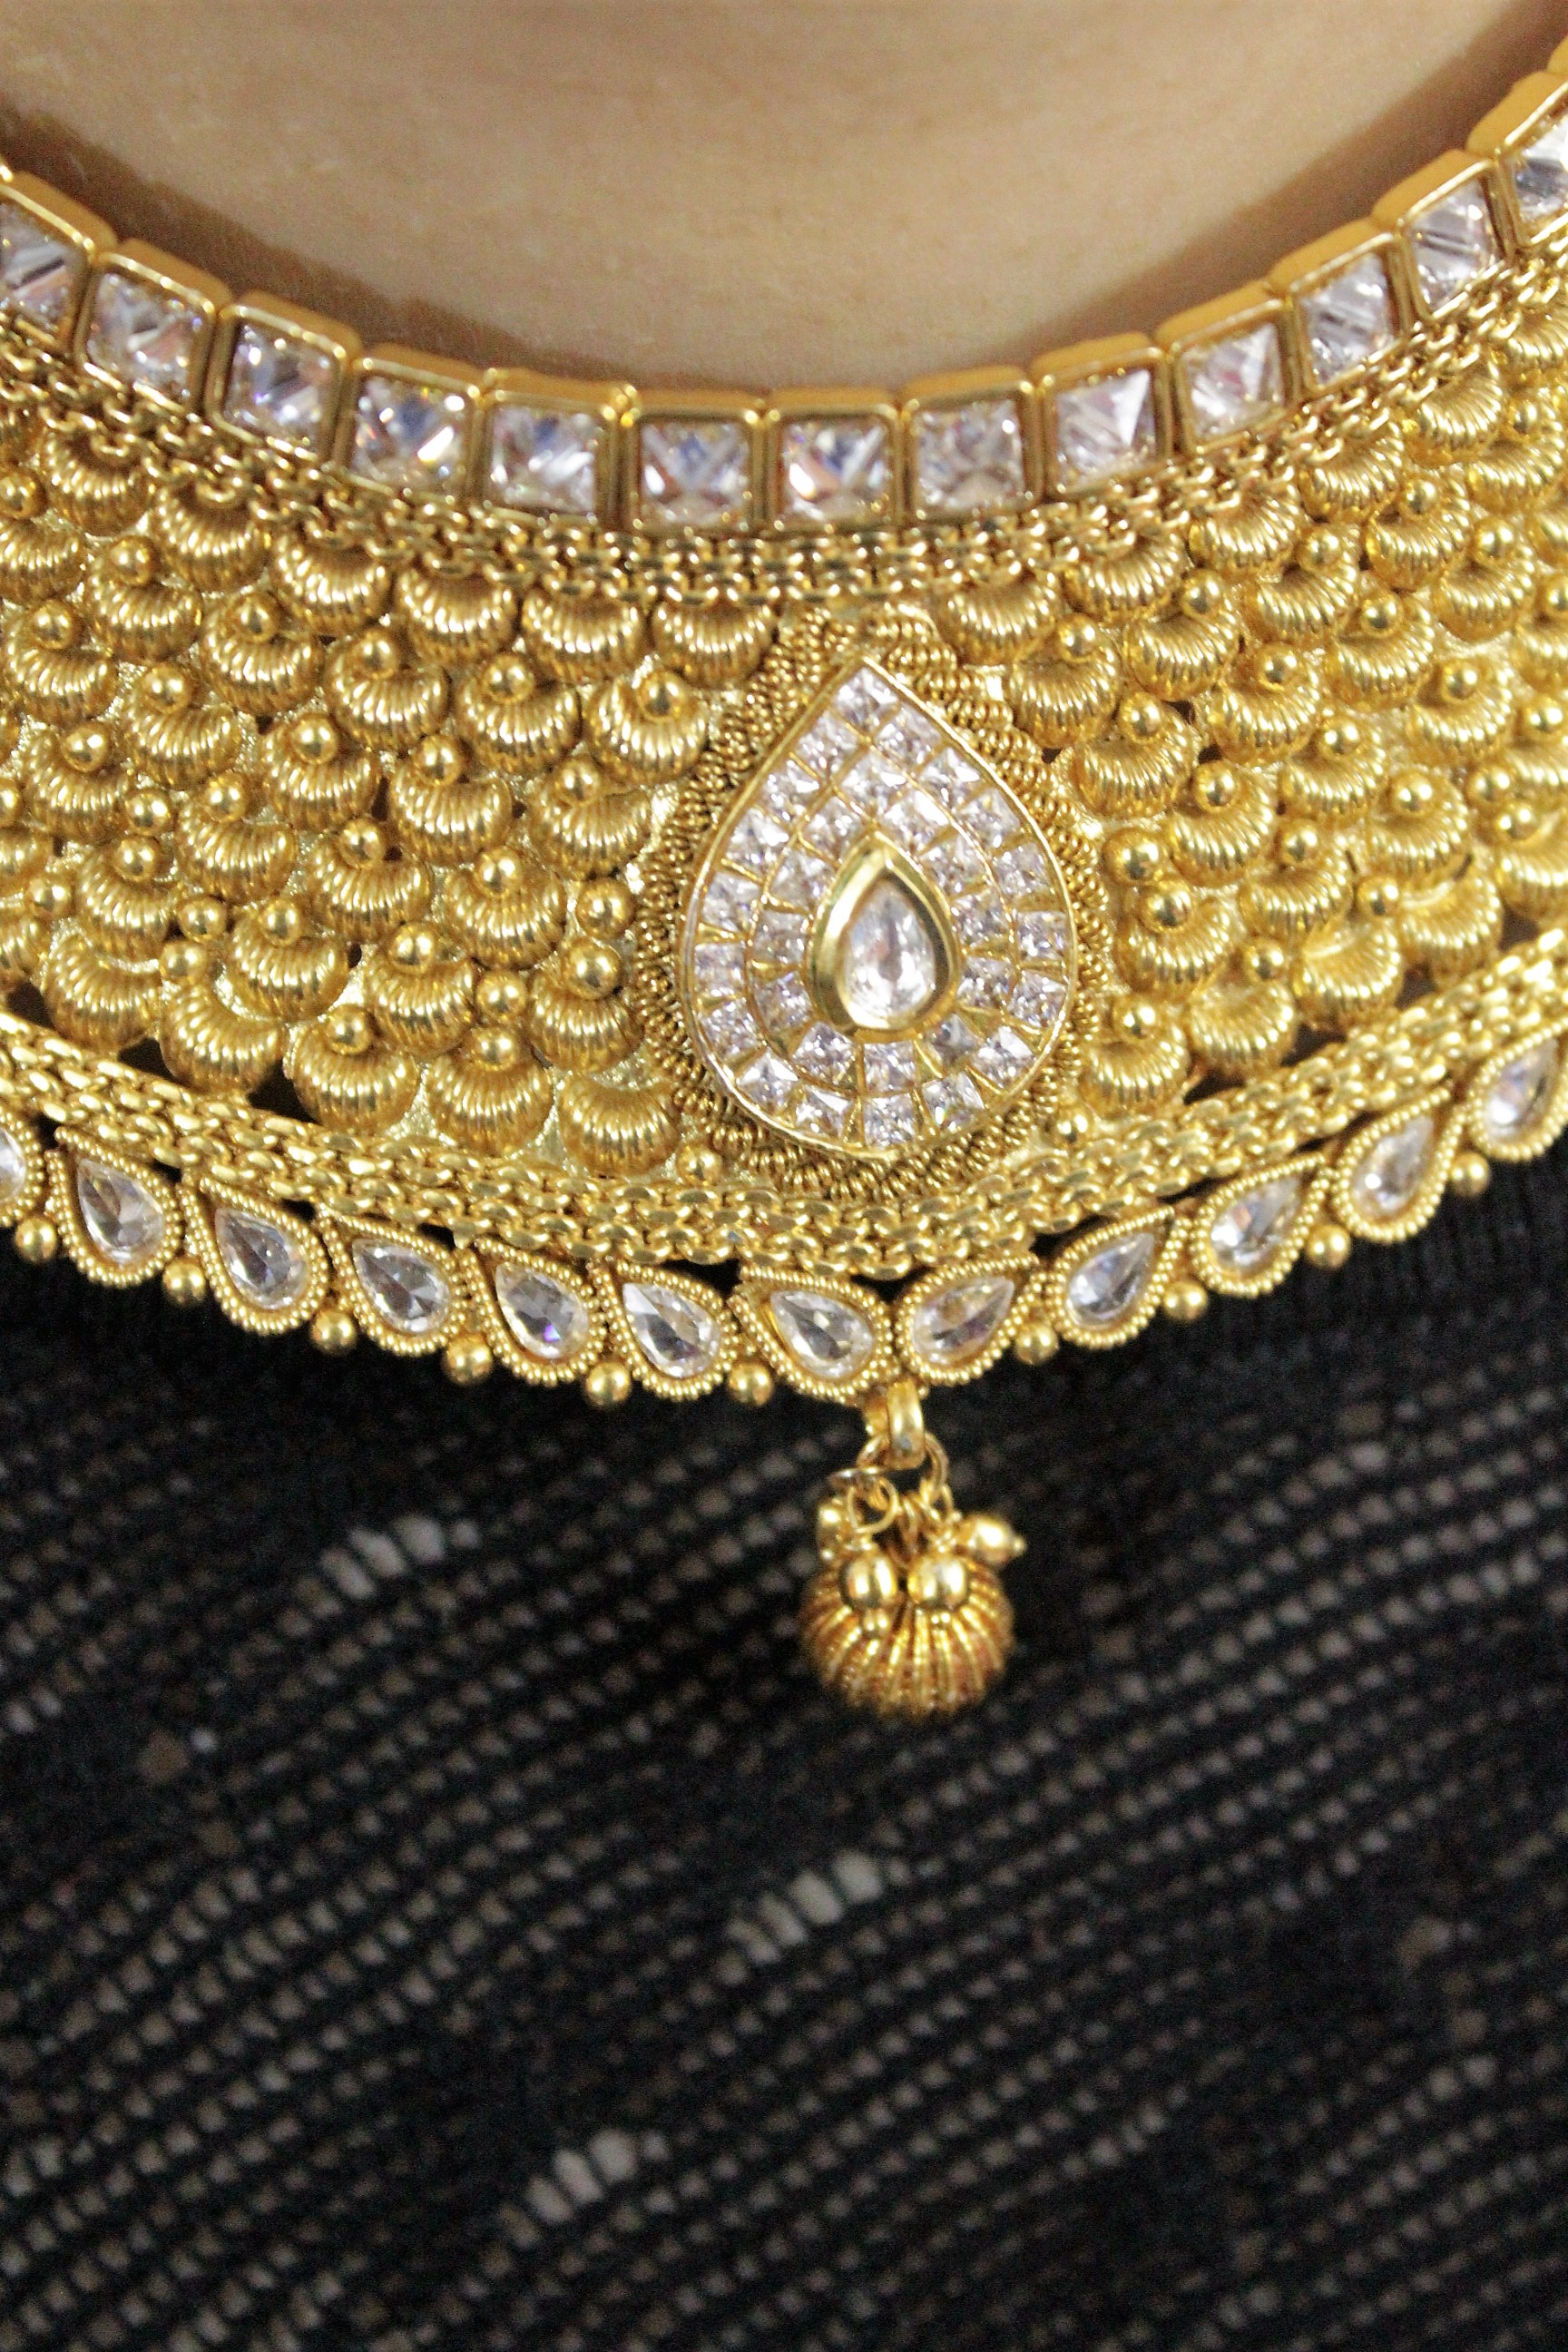 IndiHaute, Rajasthani Artificial Jewellery Set in Chandigarh,Rajasthani maang tikka in Chandigarh,Rajasthani Artificial Jewellery manufacturer in Chandigarh,Rajasthani Artificial Jewellery supplier in Chandigarh